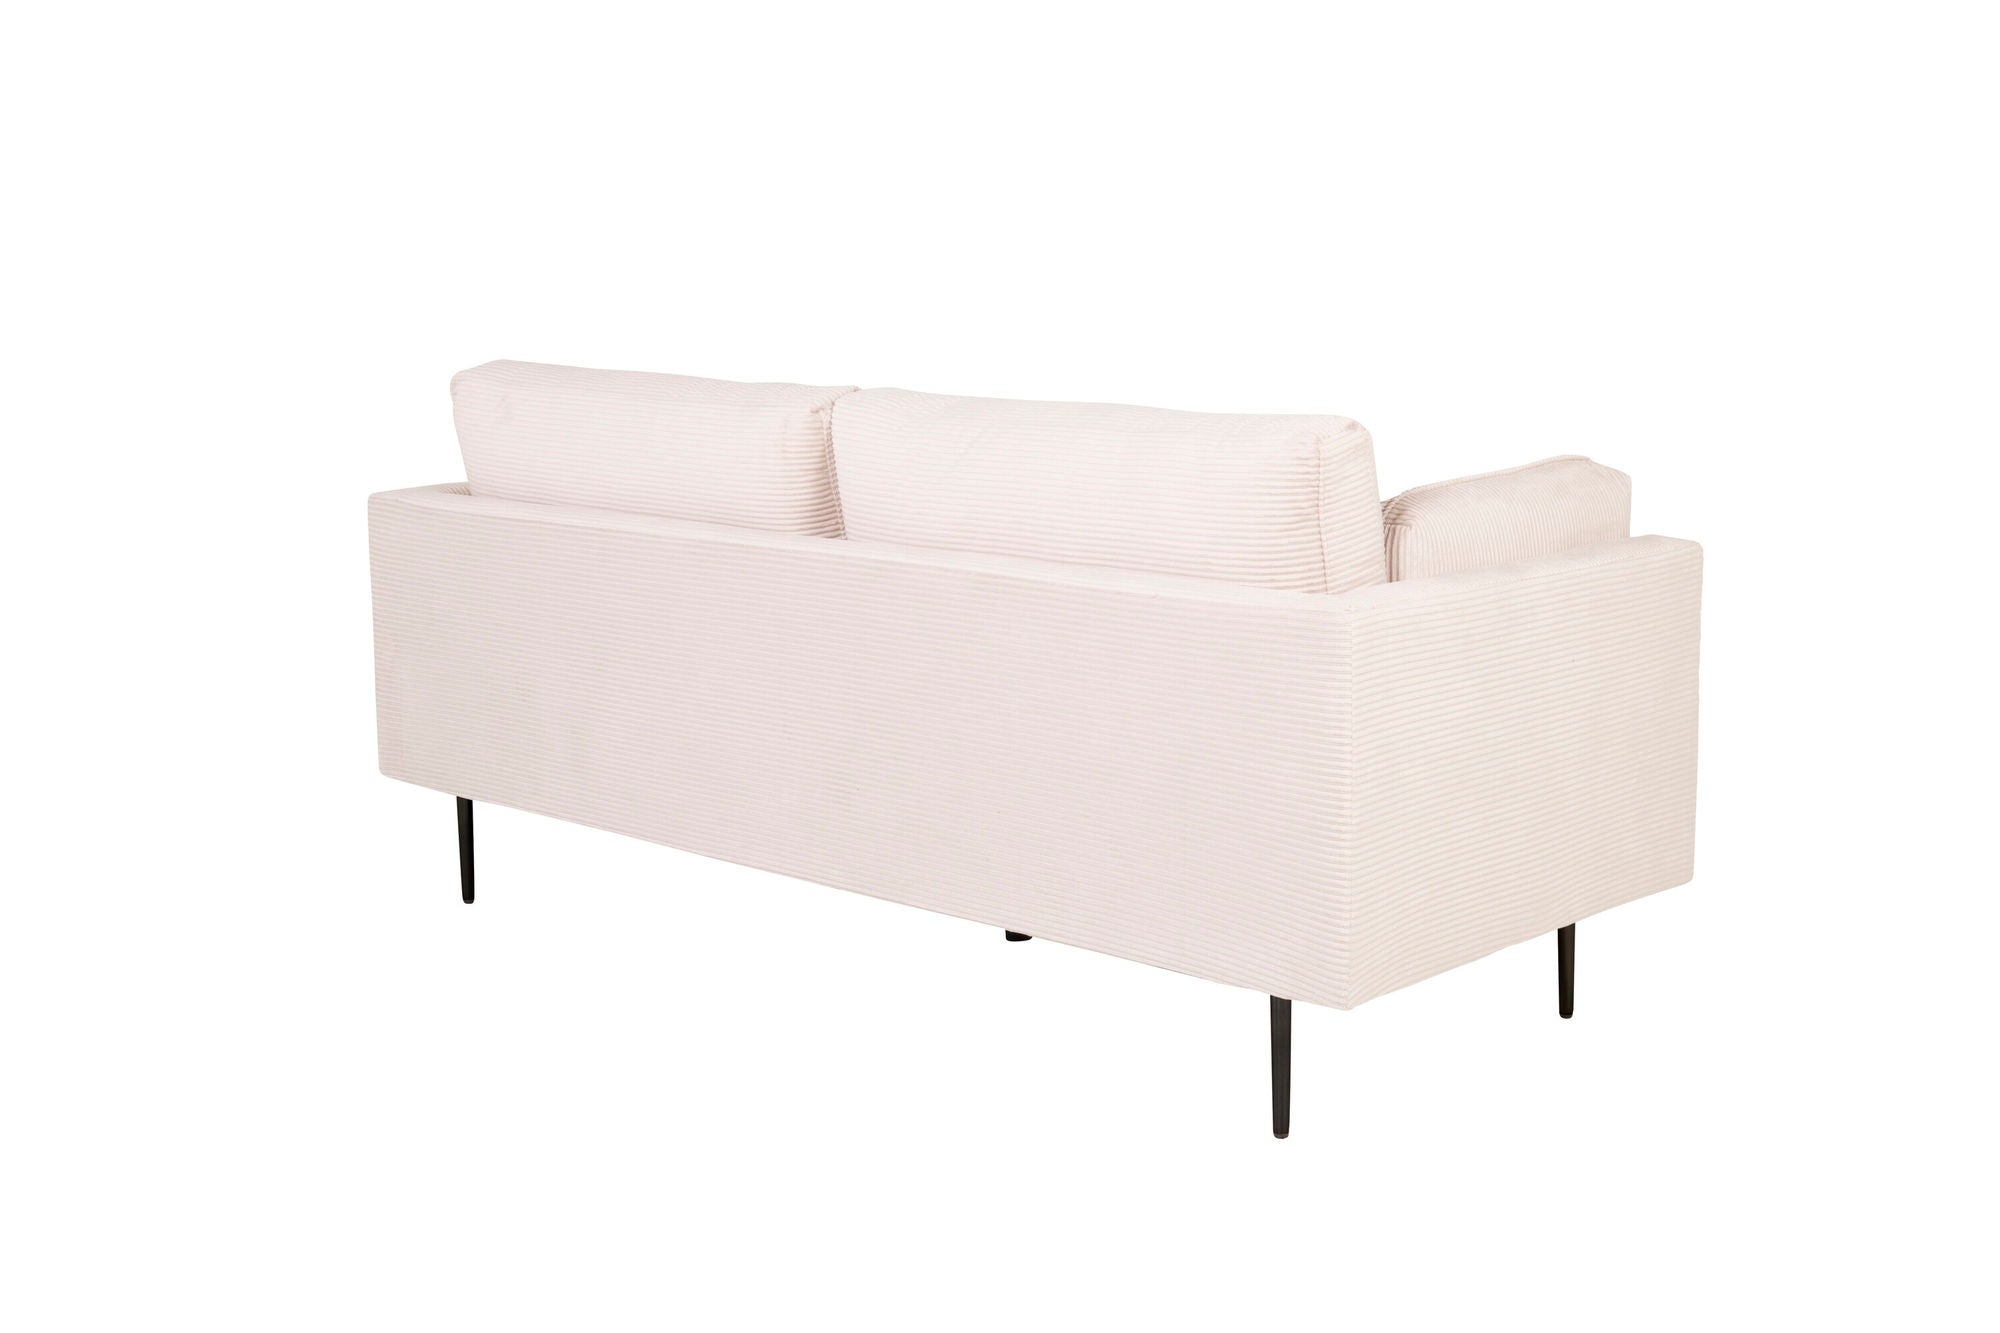 Venture Home Boom - 3 seat sofa Corduroy - Beige+Black Legs for Boom Sofa - FULL SET_1 - vivahabitat.com